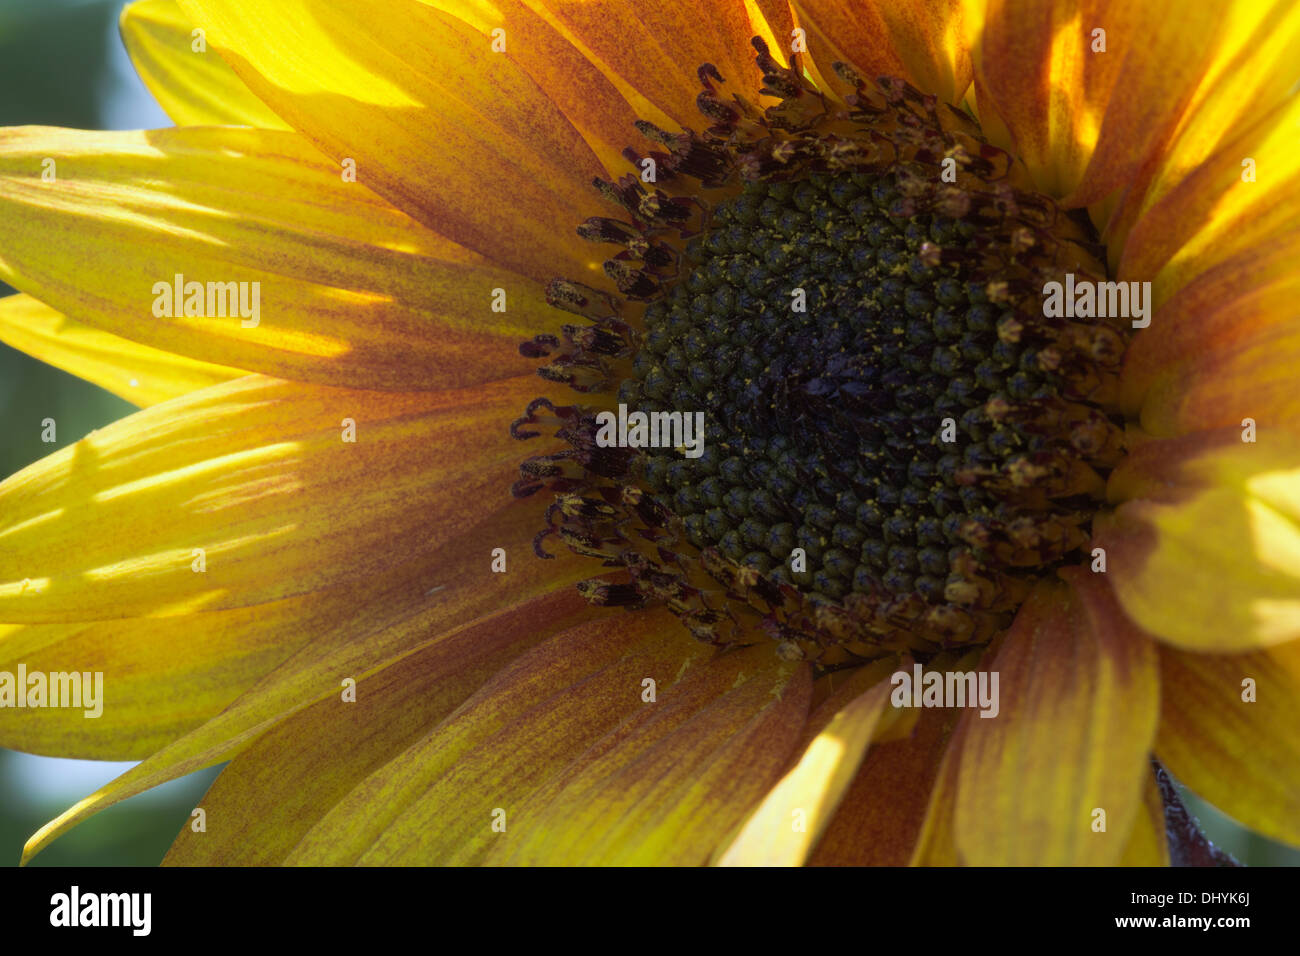 Heart of the sunflower Stock Photo